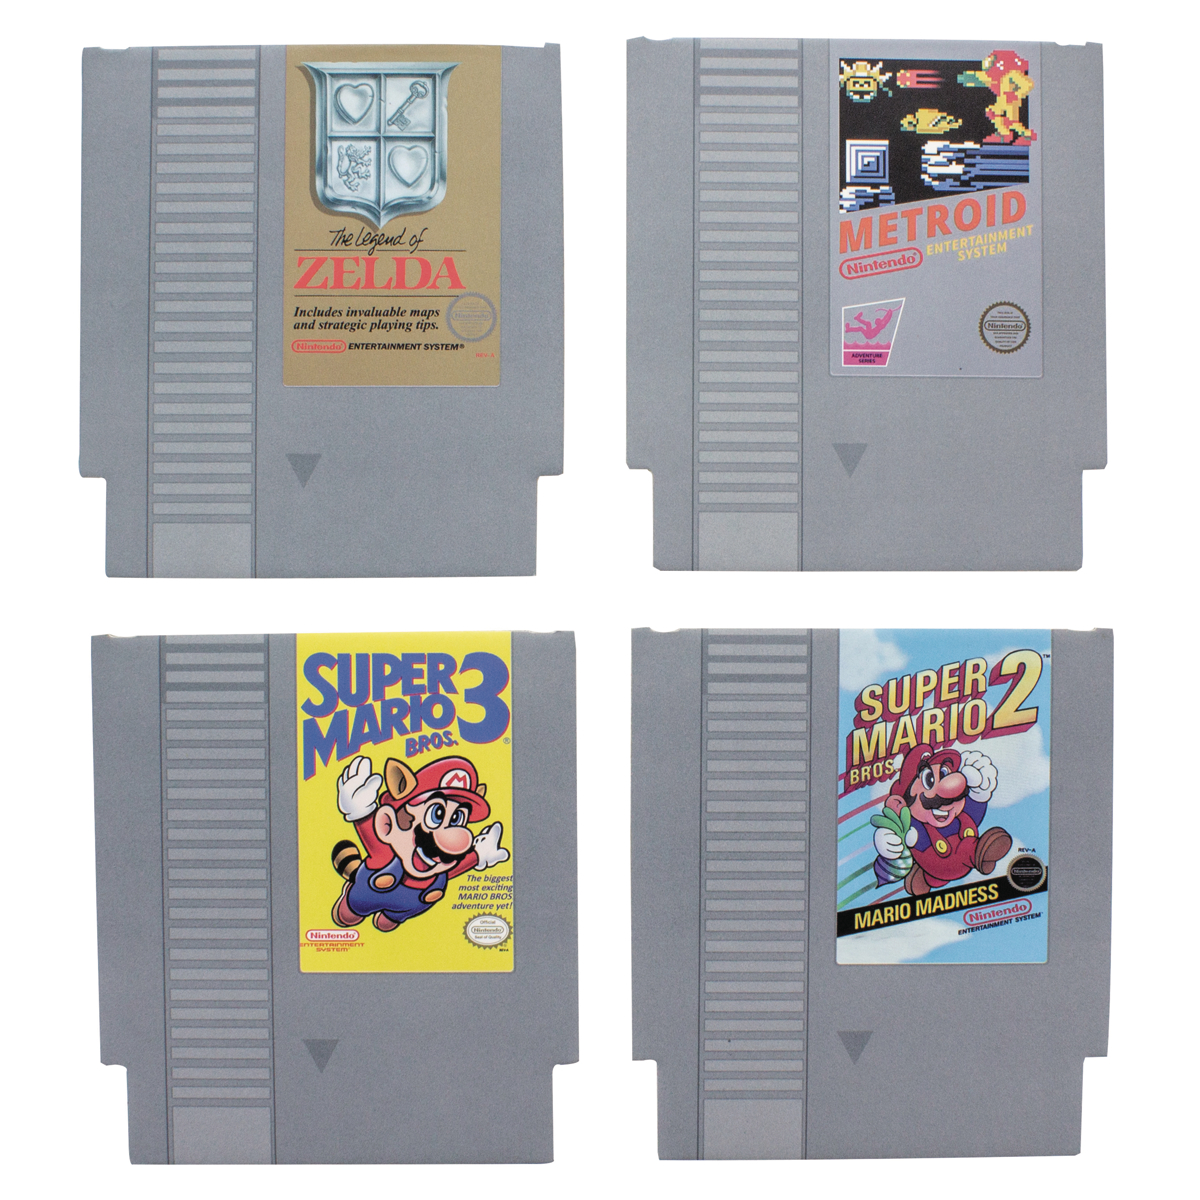 NES GAME CARTRIDGE COASTERS 8PK